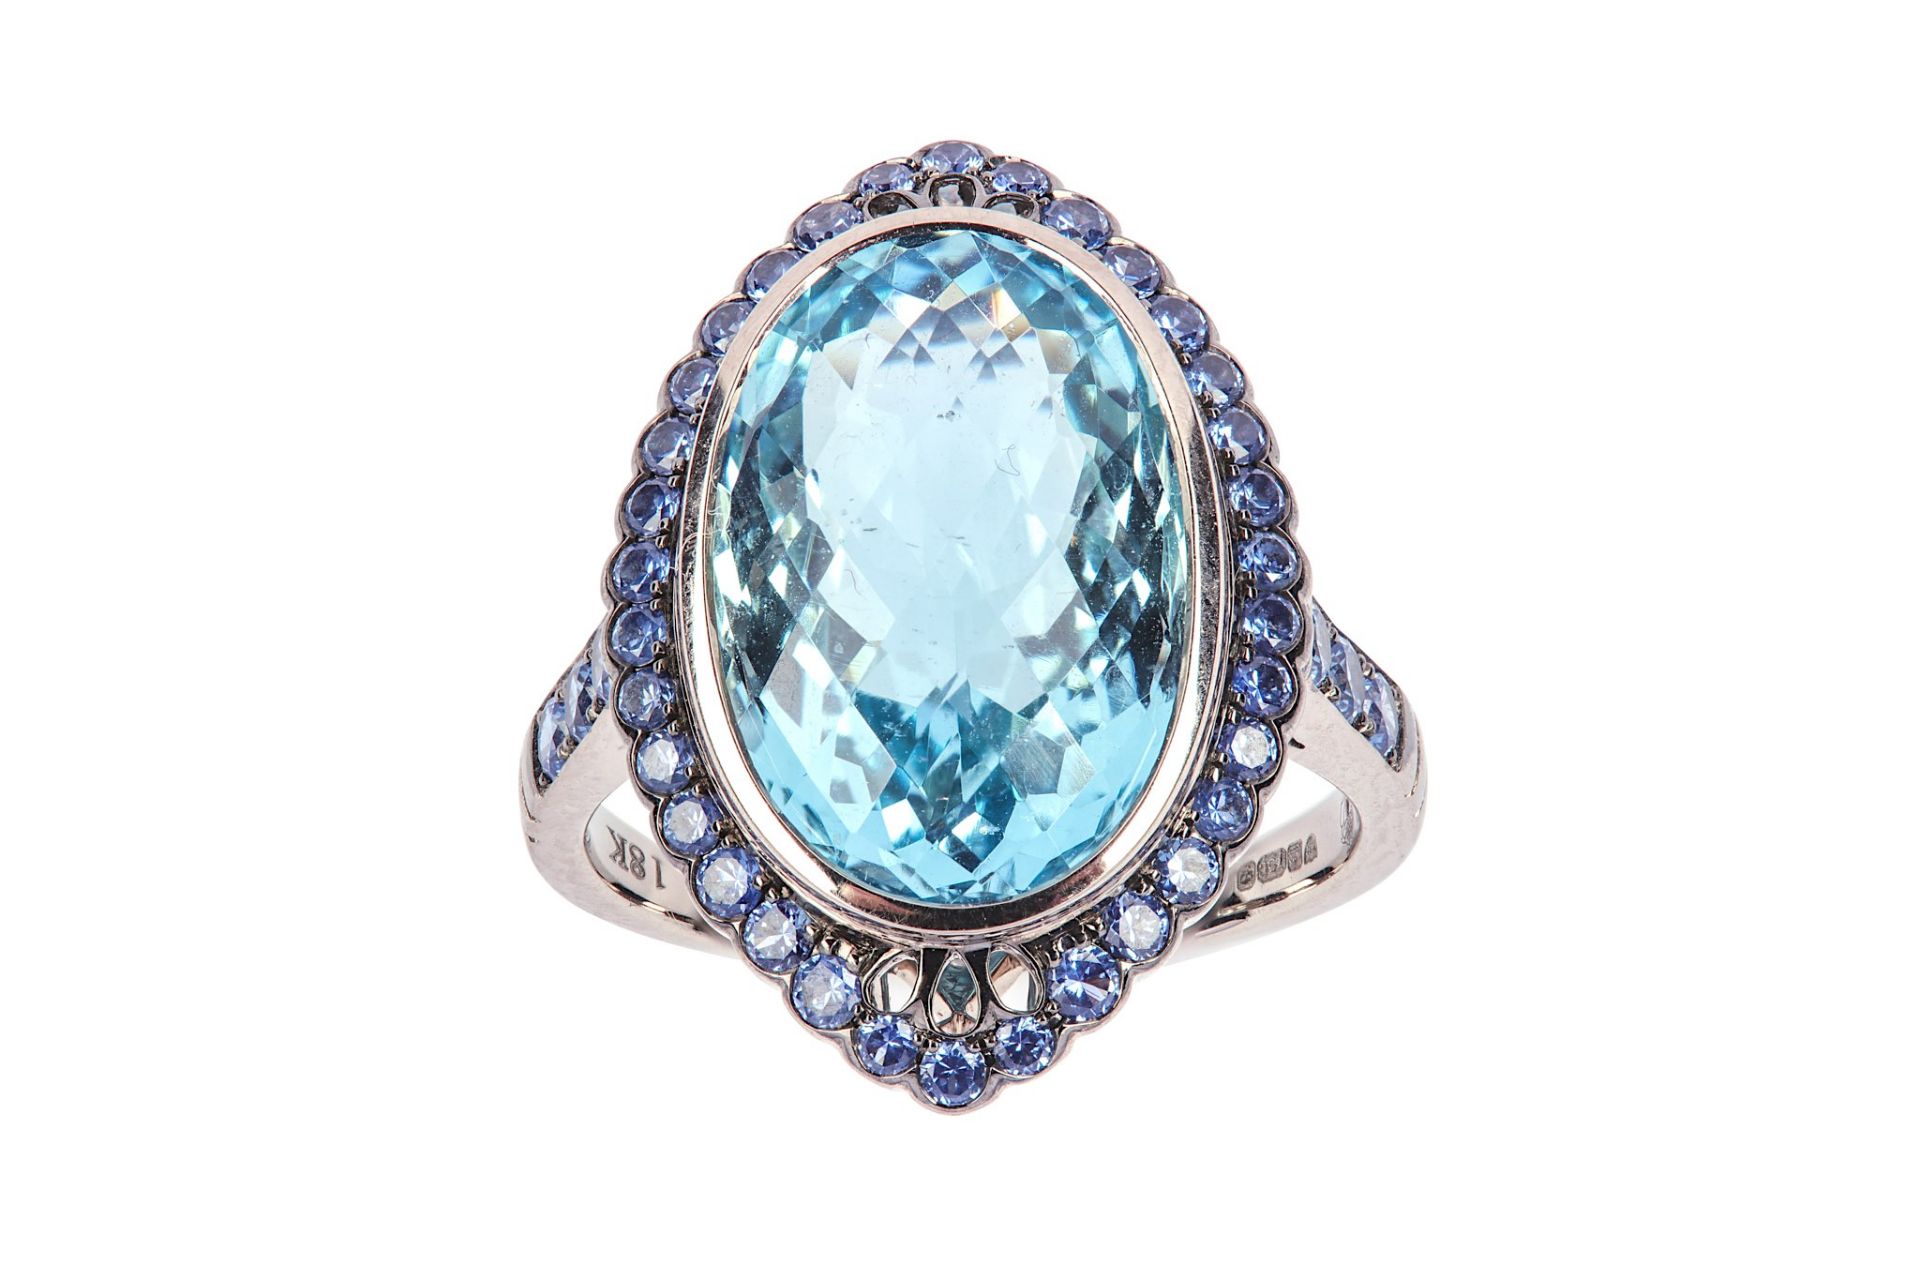 An aquamarine and sapphire dress ring